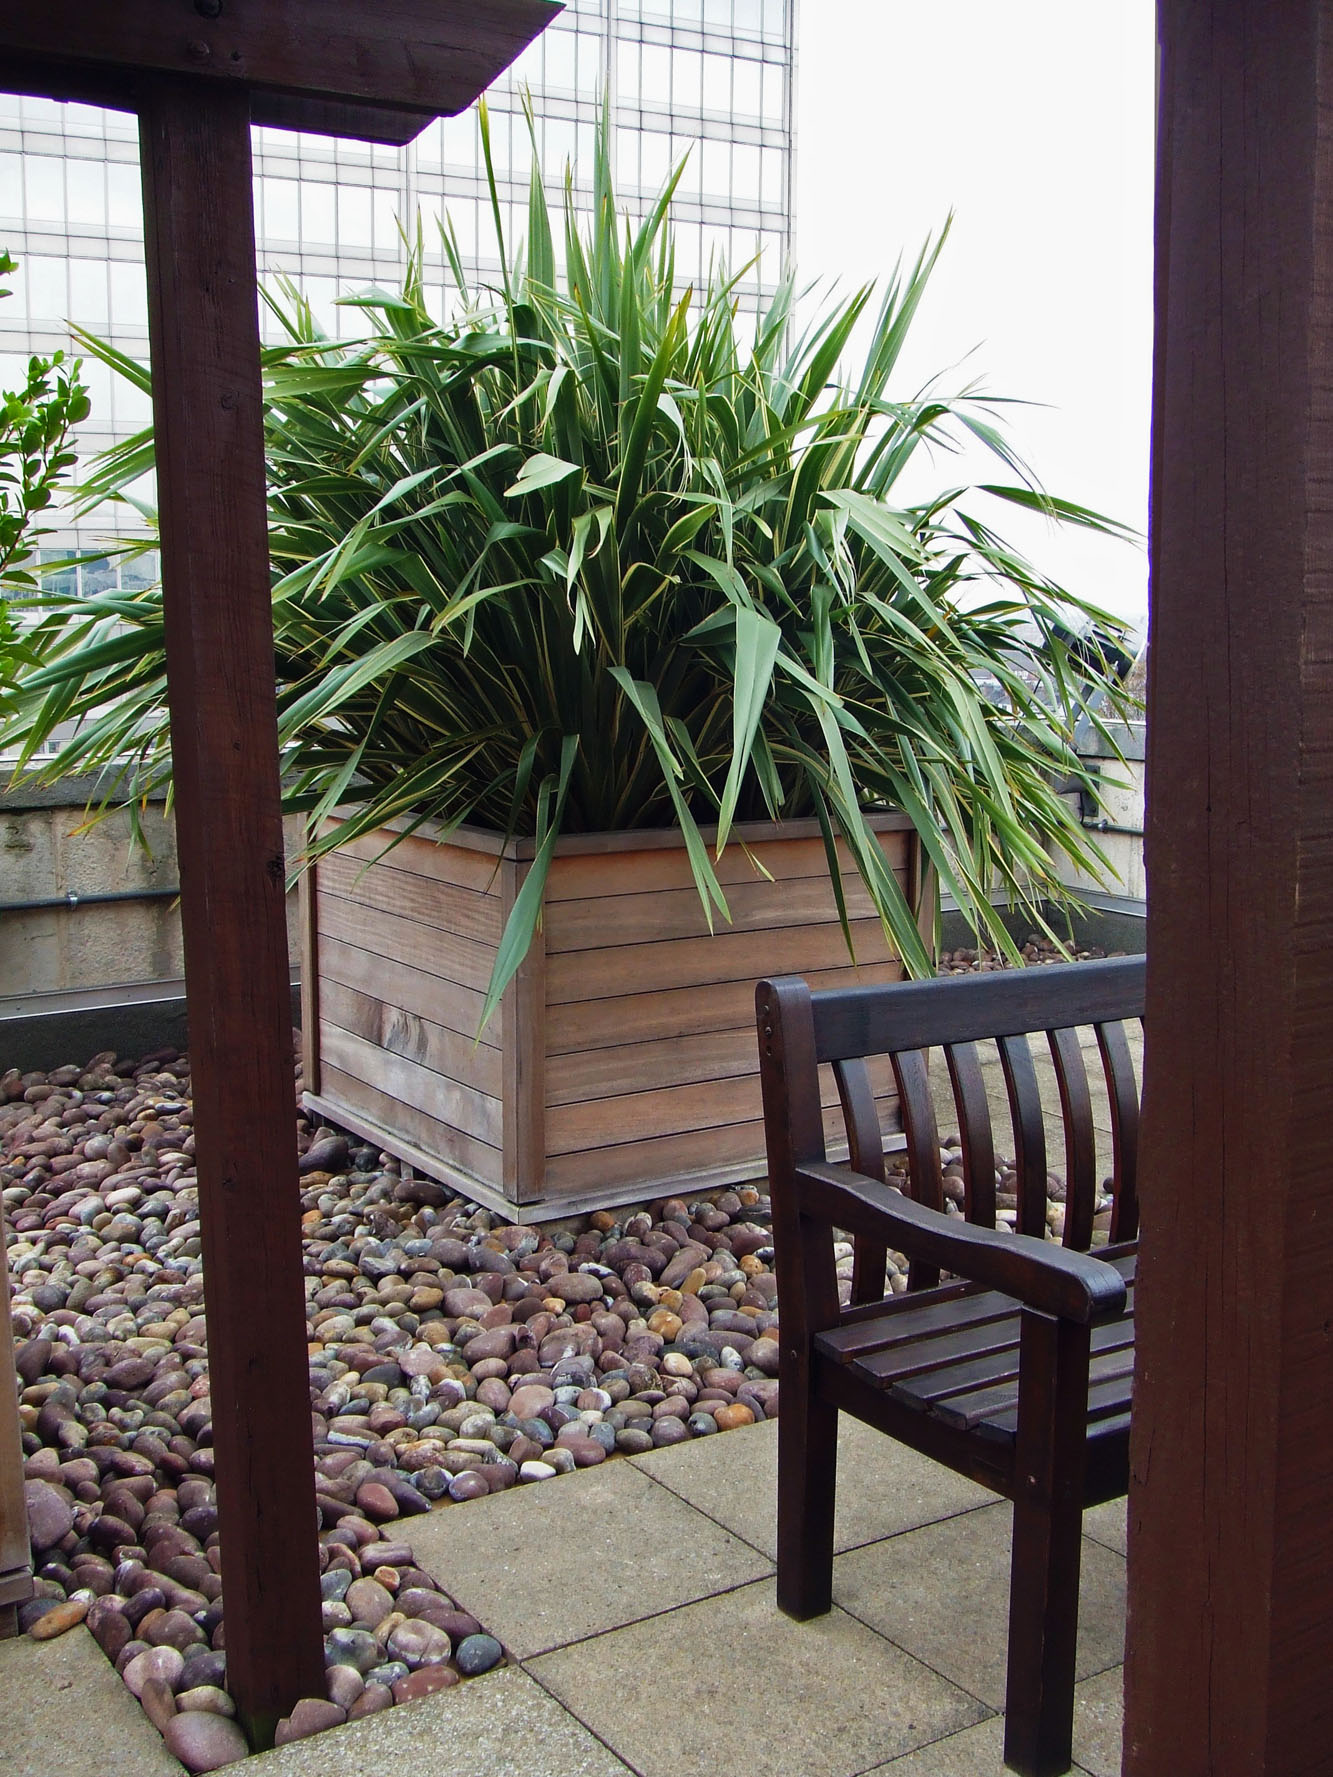 exterior plants in box planter